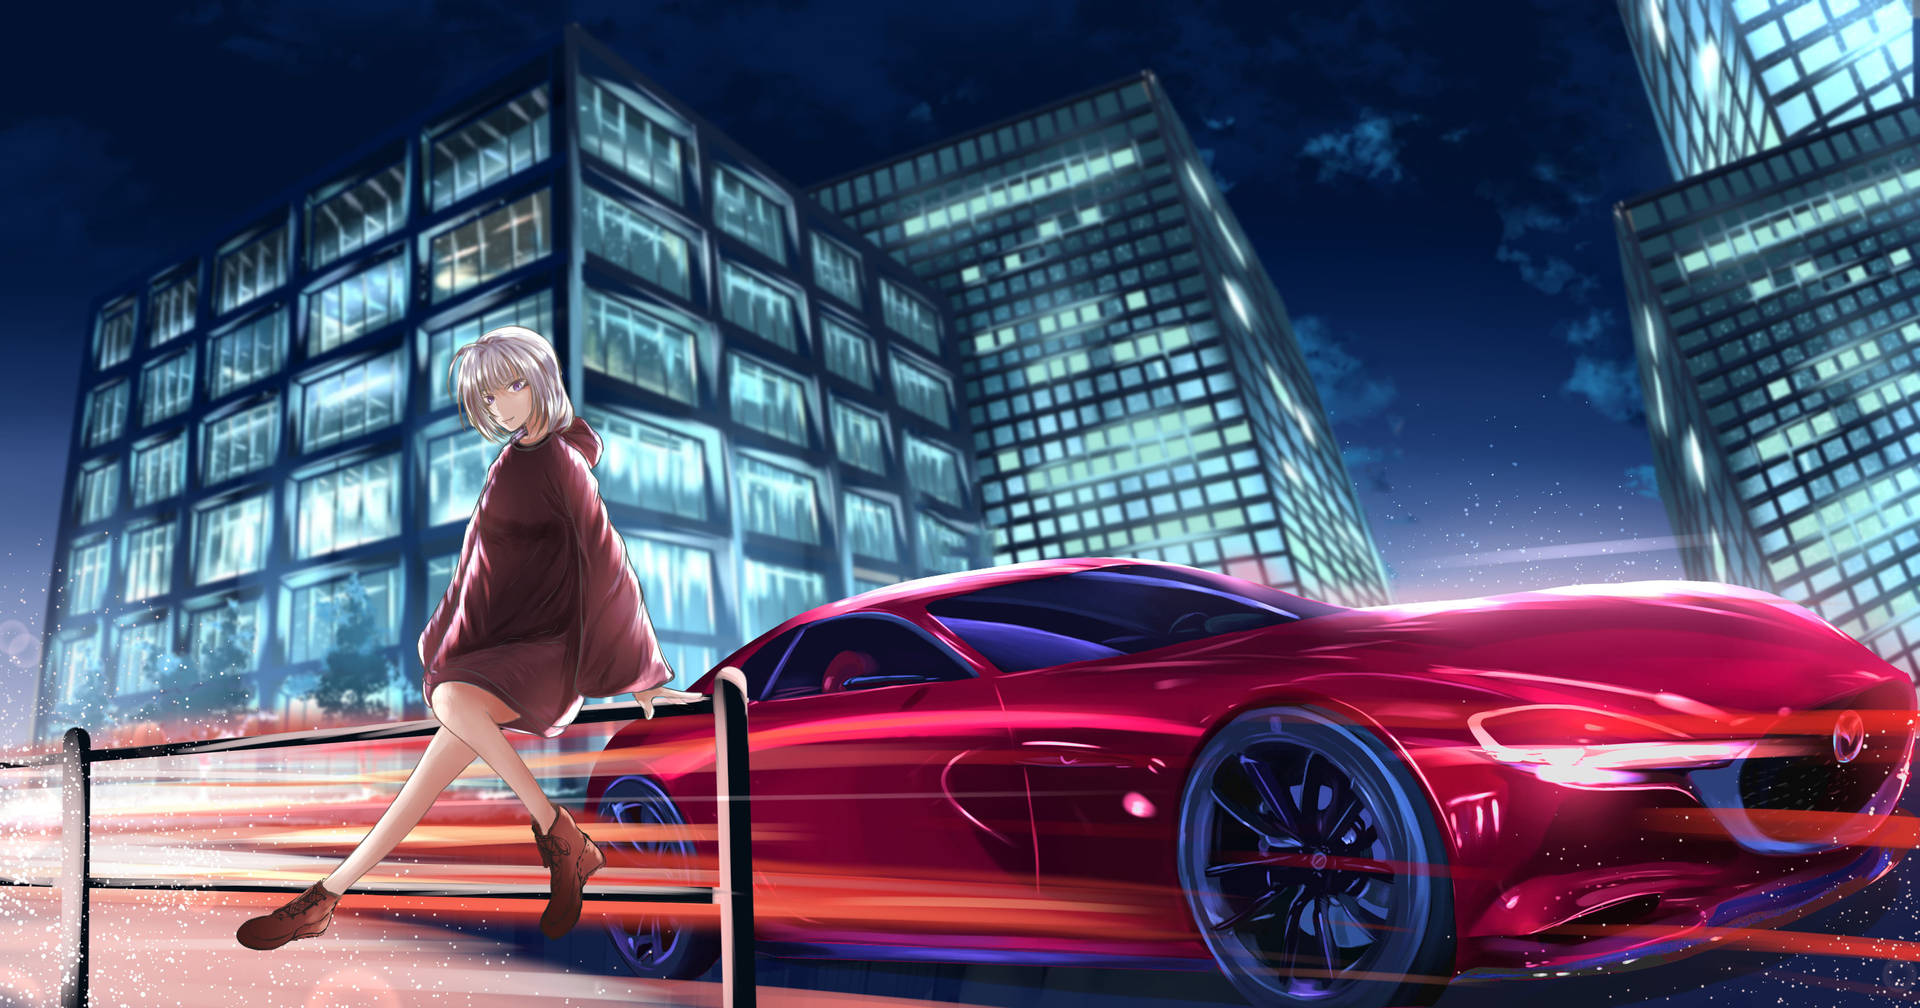 Red Mazda Anime Car Background